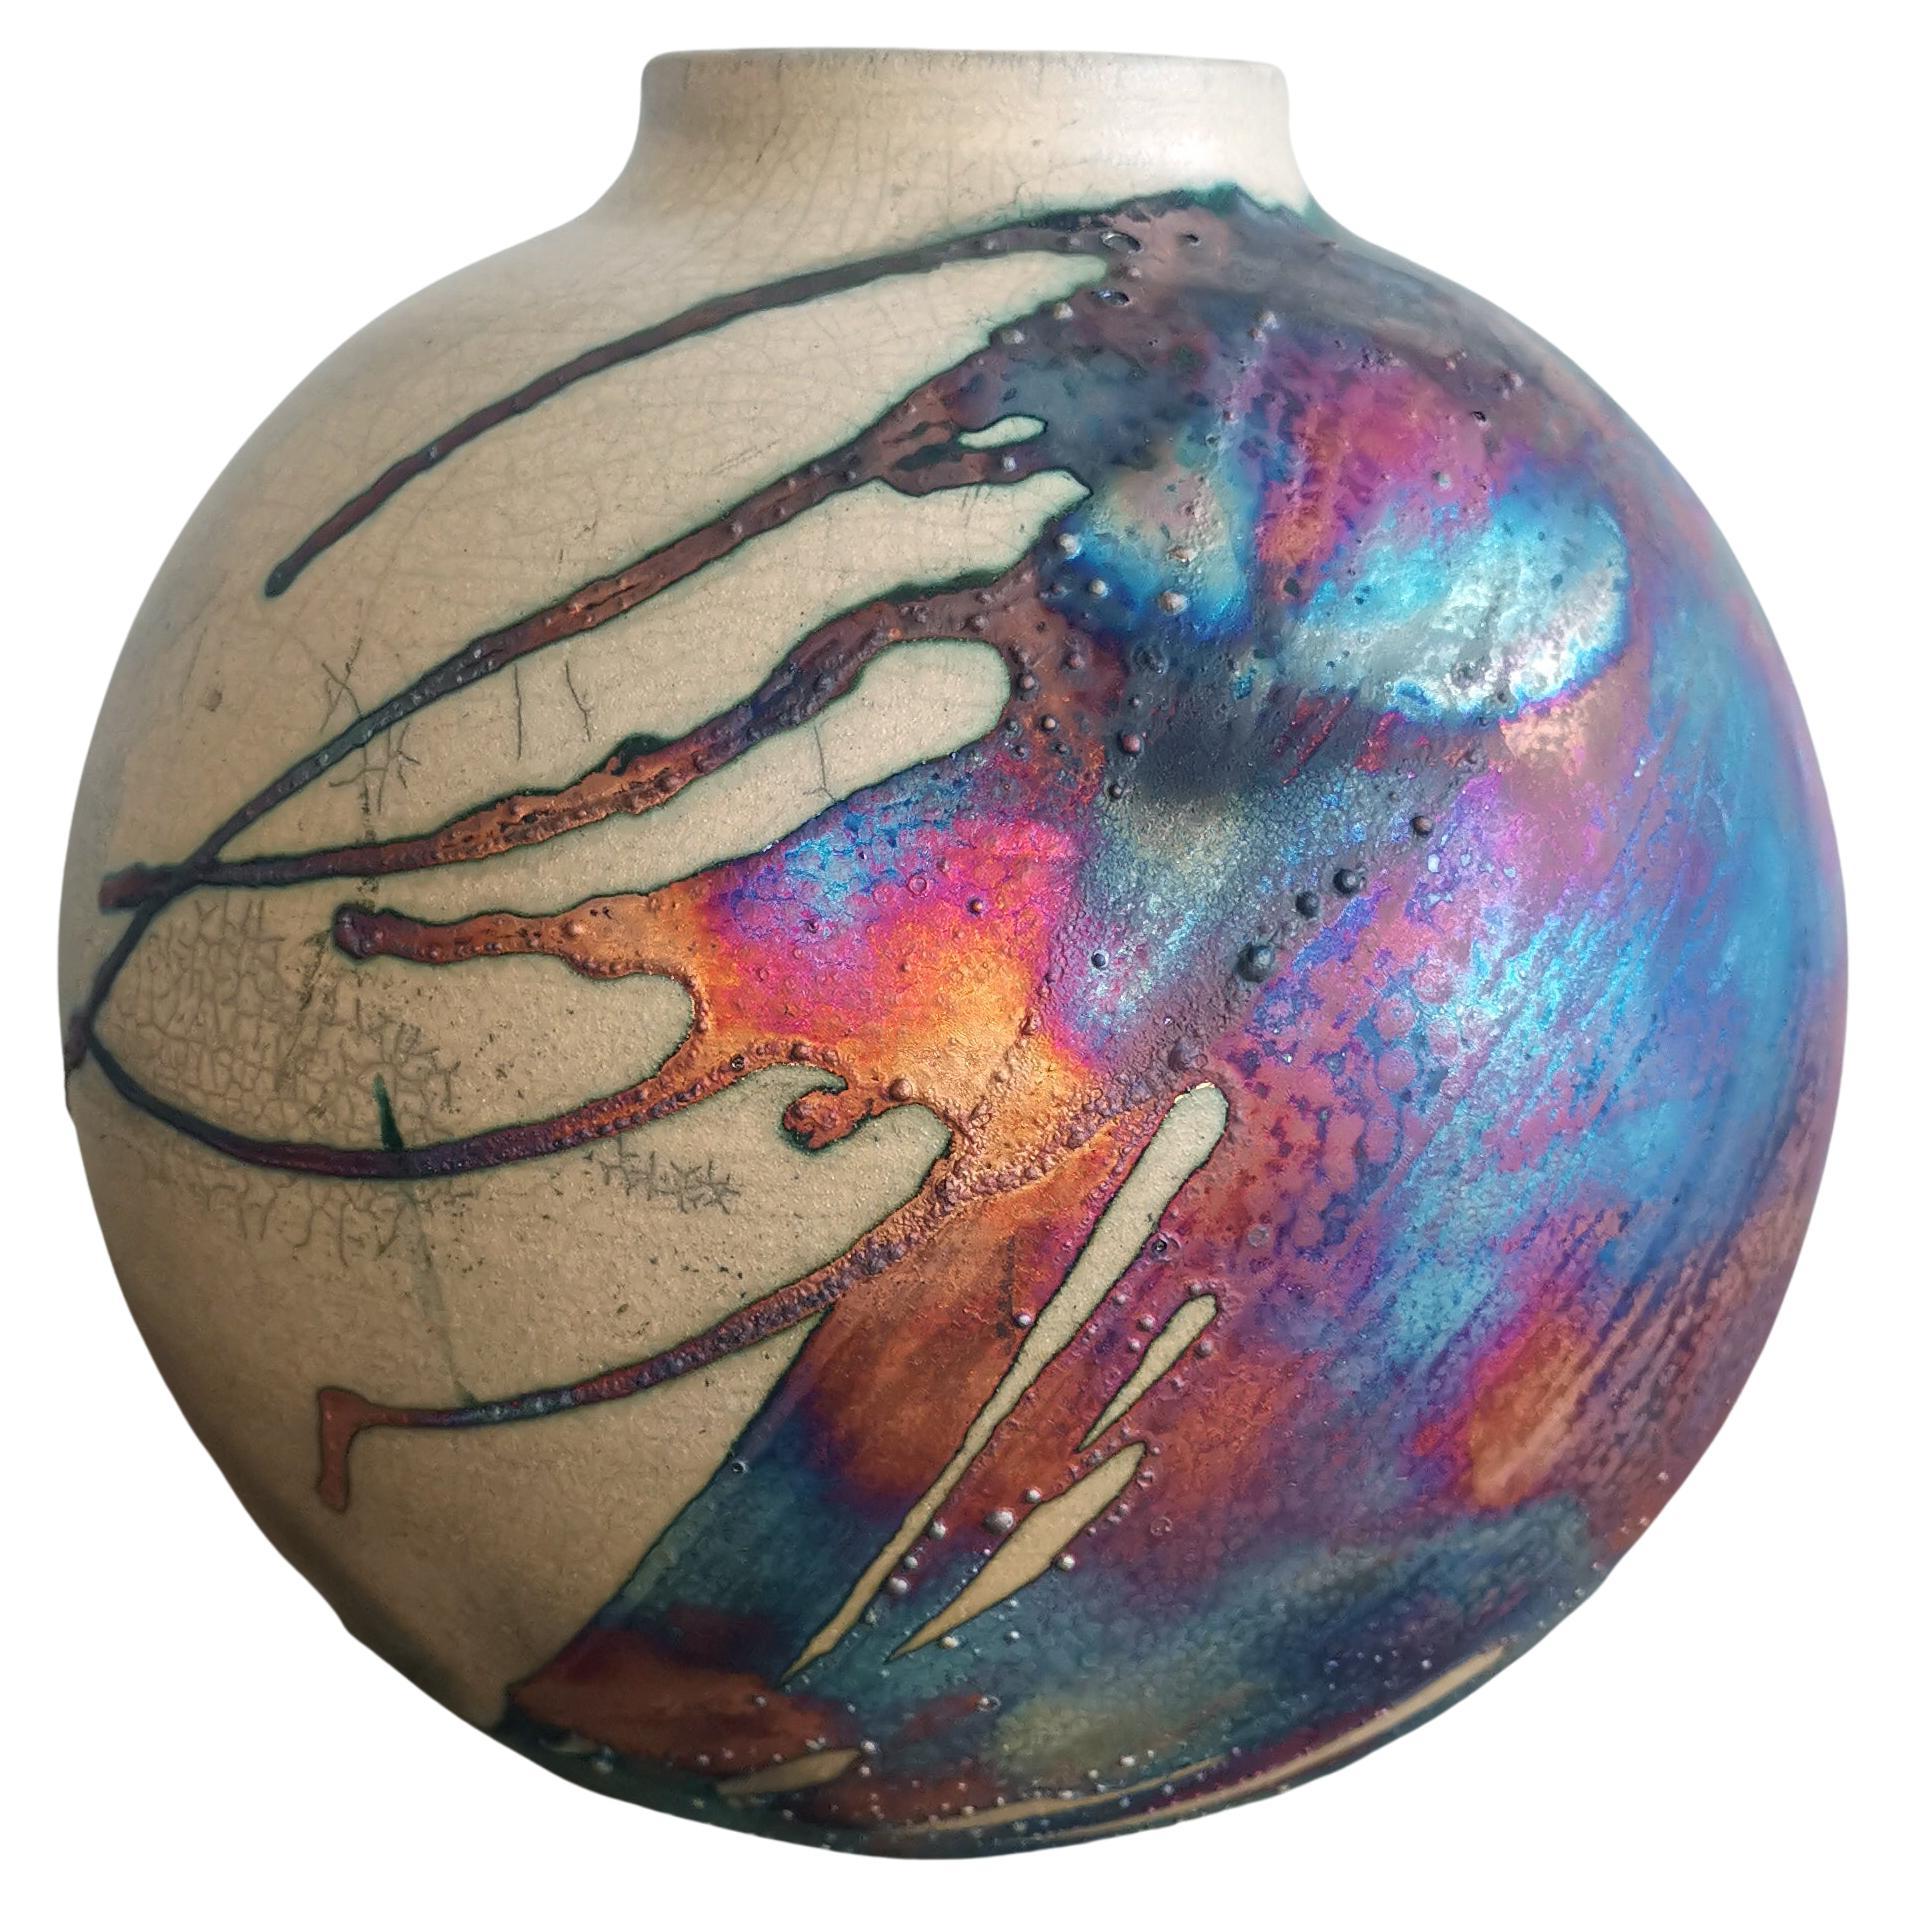 Raaquu Raku Fired Large Globe Vase S/N0000637 Centerpiece Art Series